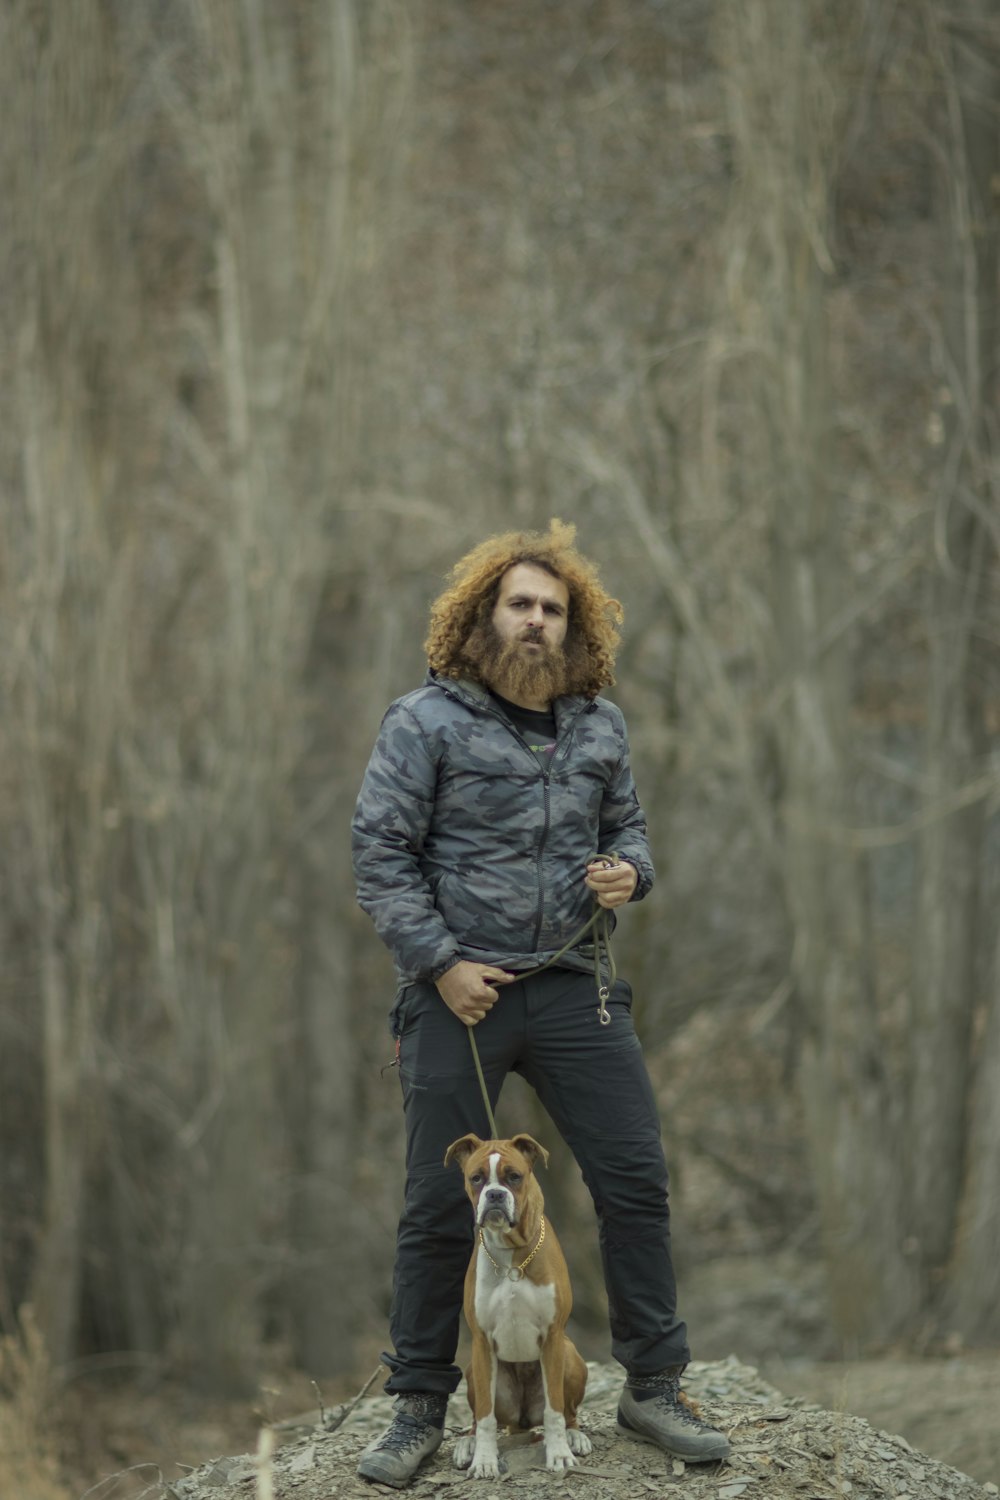 a man with a beard standing next to a dog